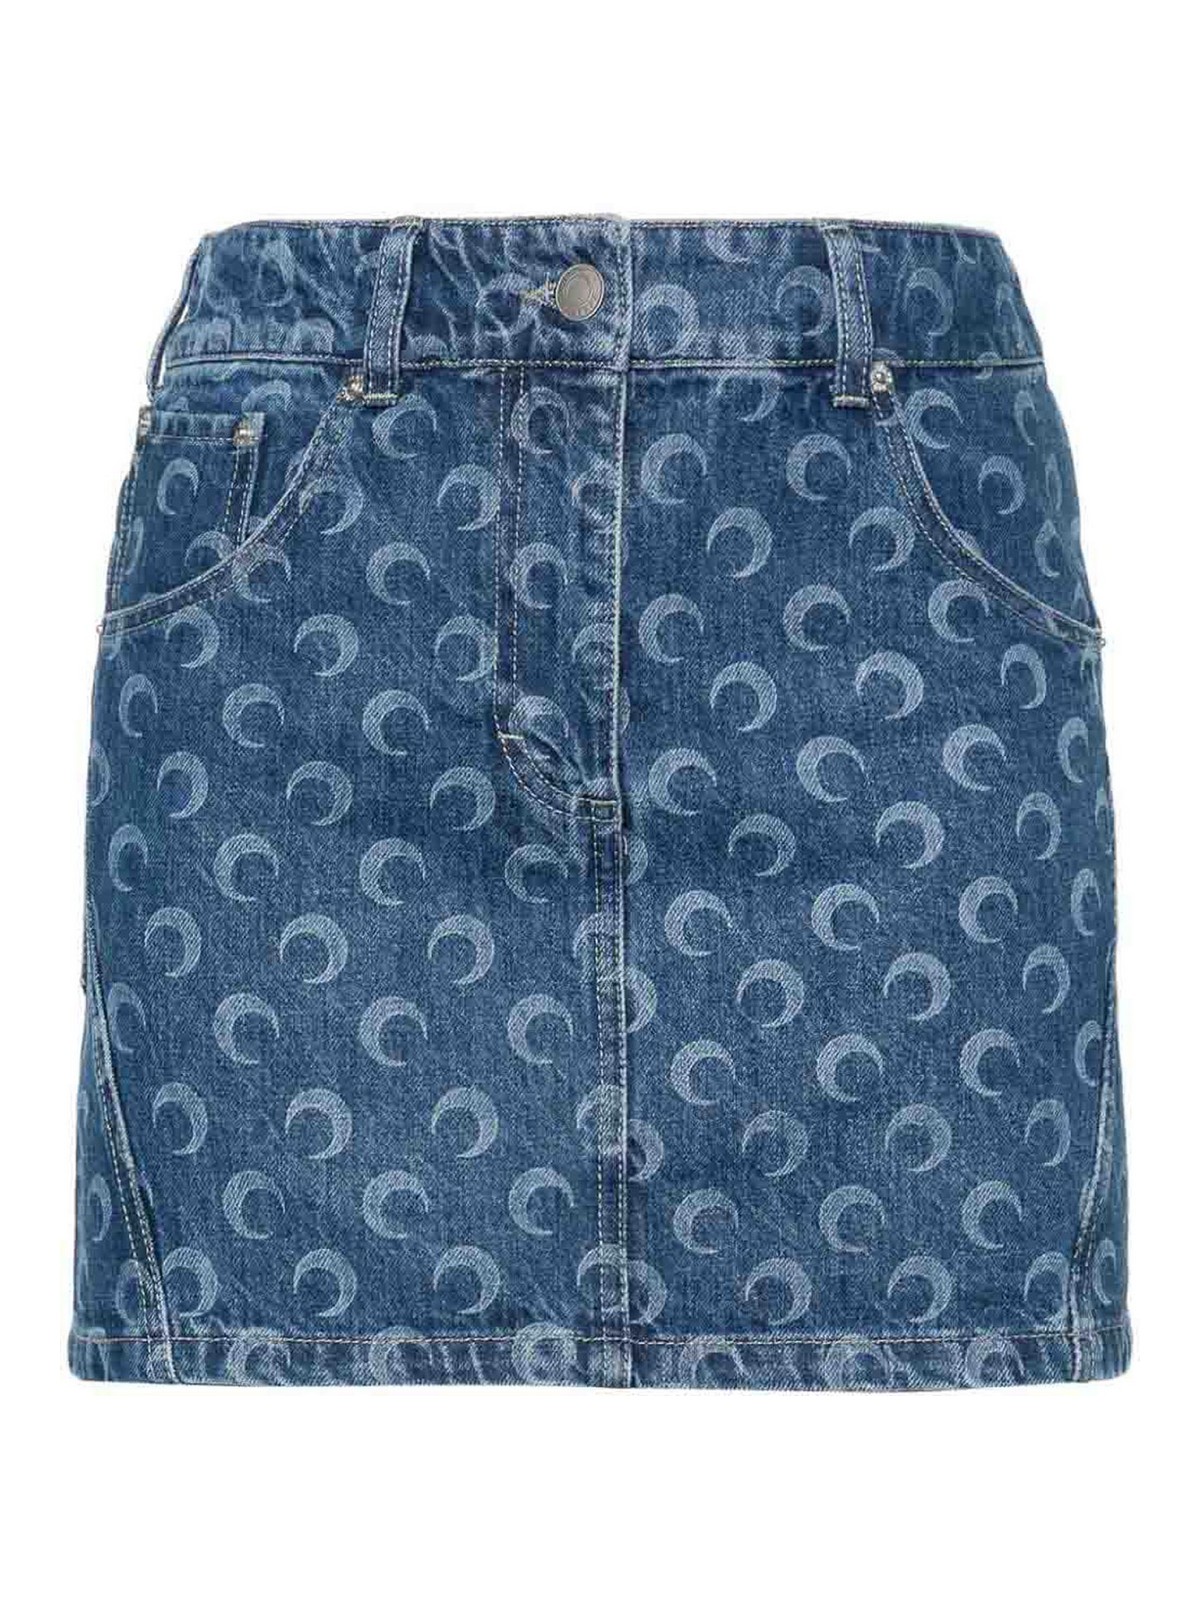 Marine Serre Moon Print Denim Mini Skirt In Blue